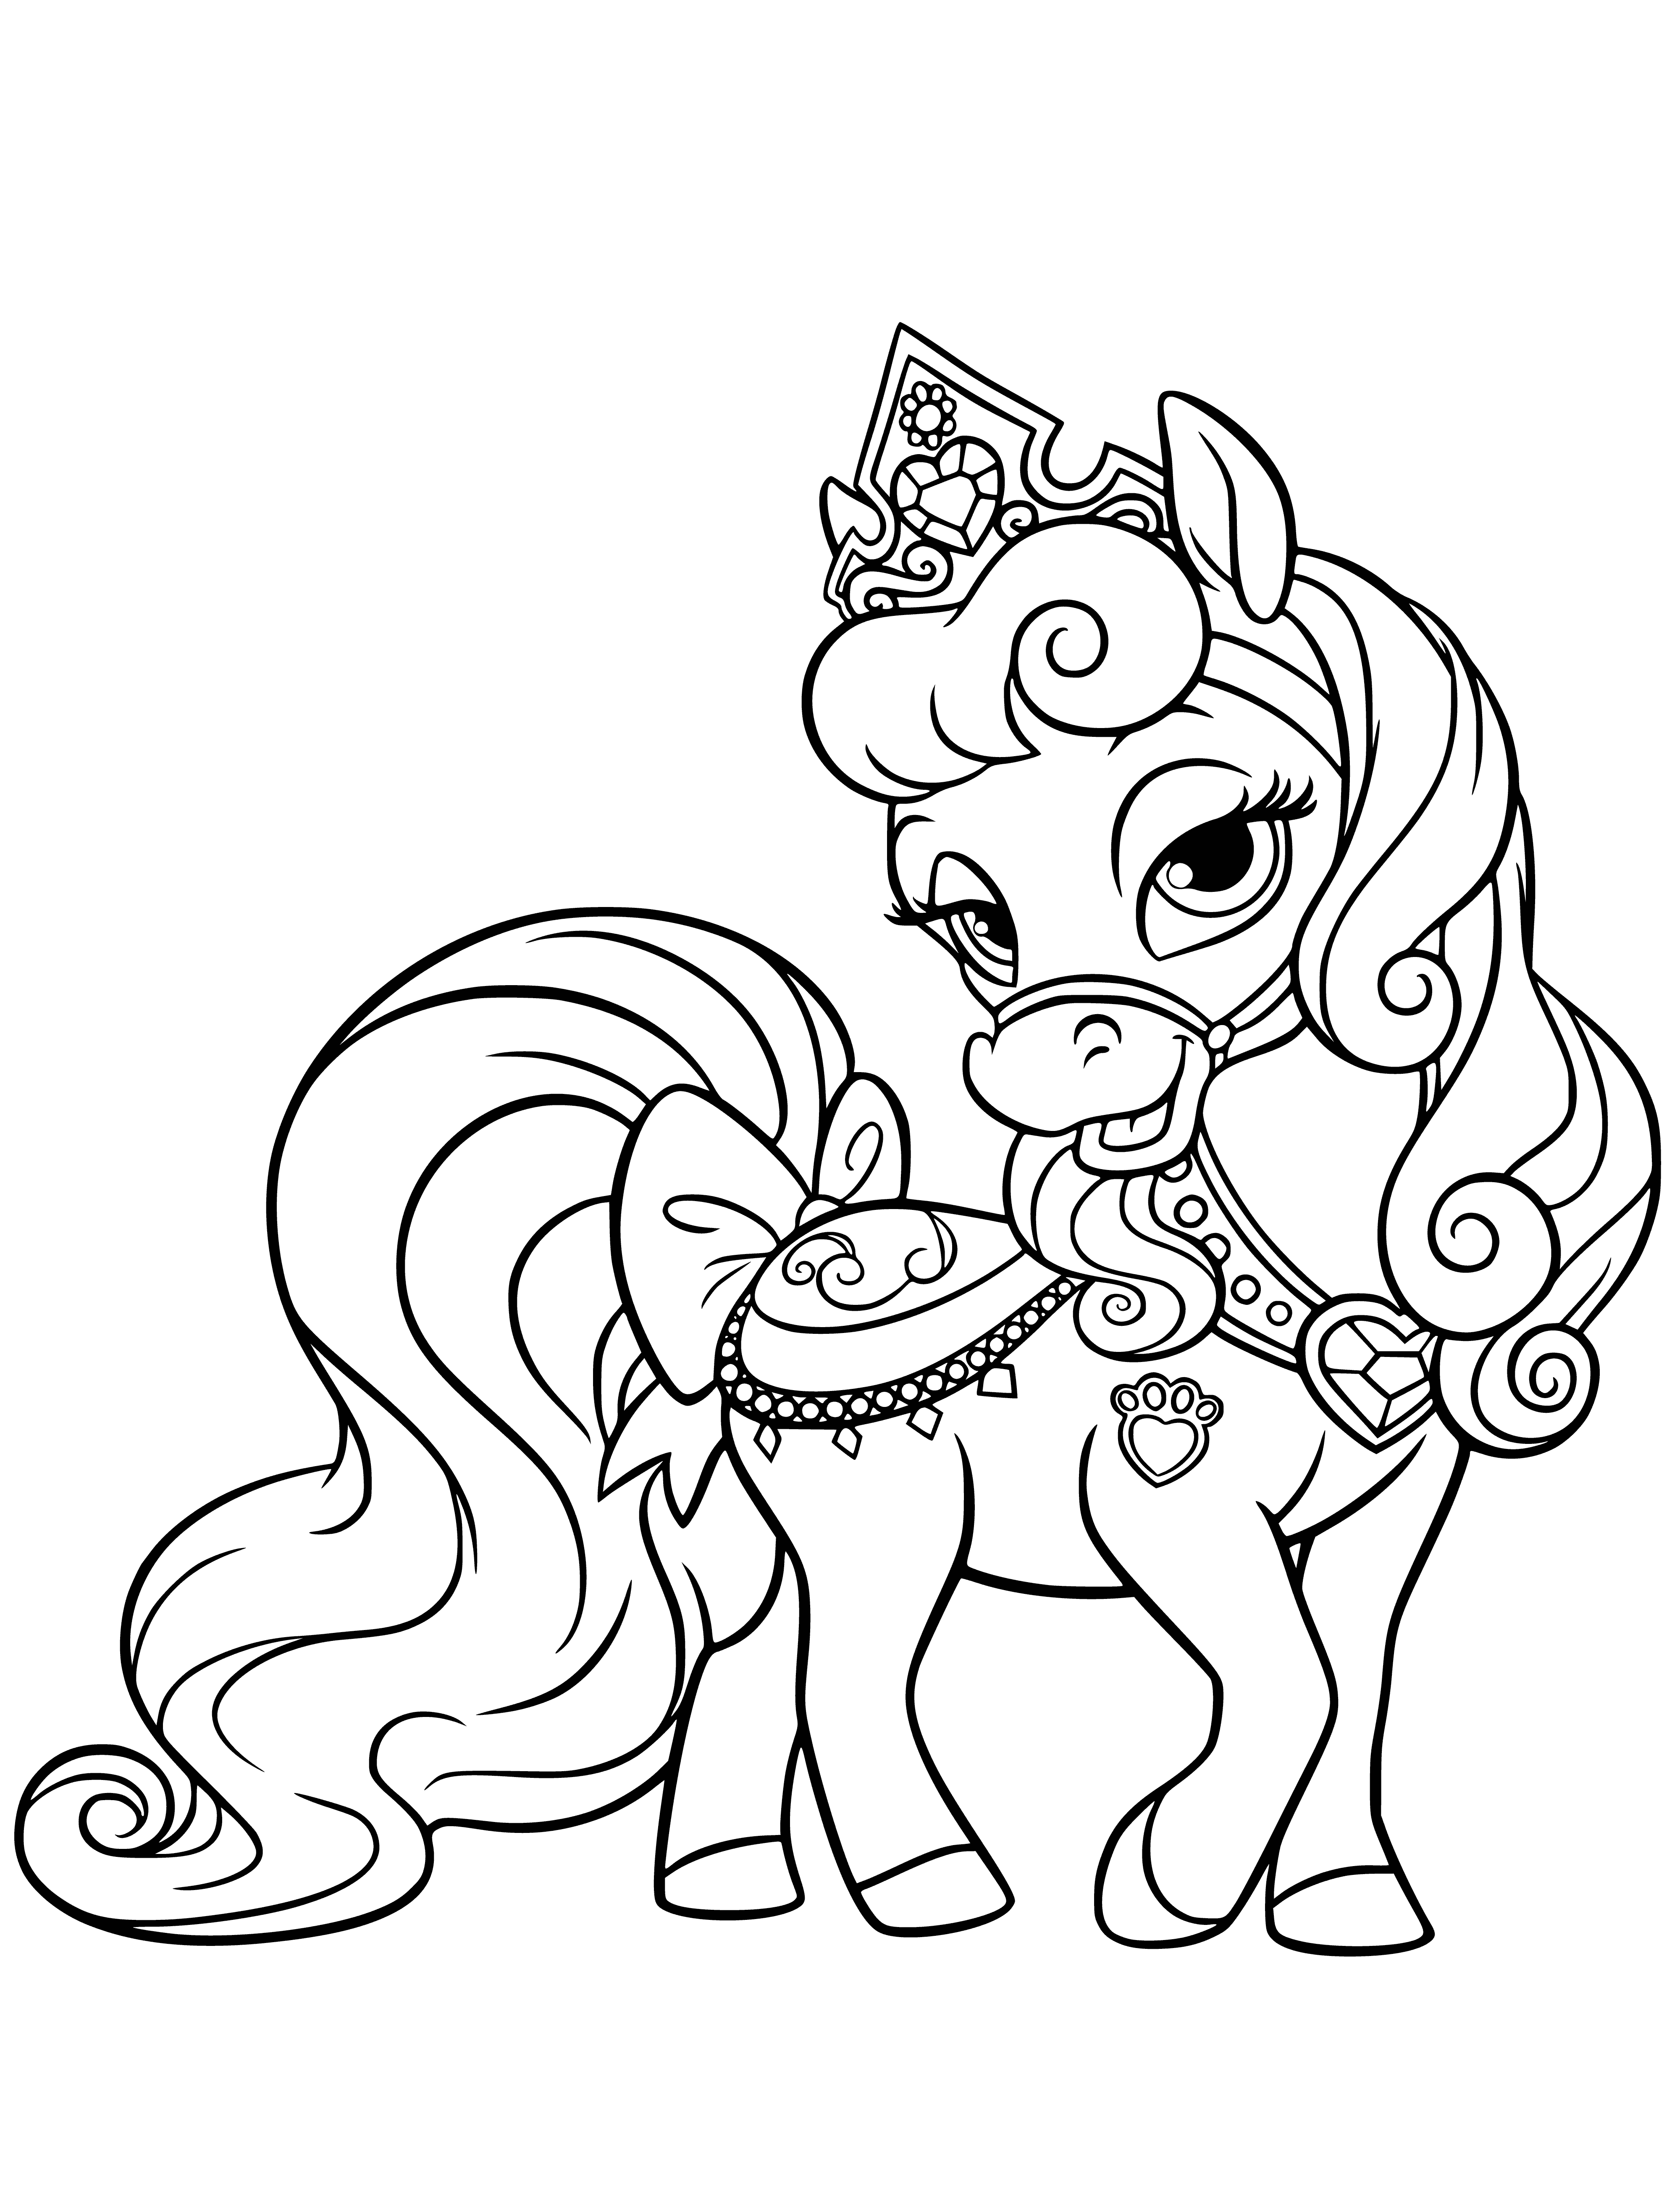 Pony Caramel. Princess Aurora's pet coloring page